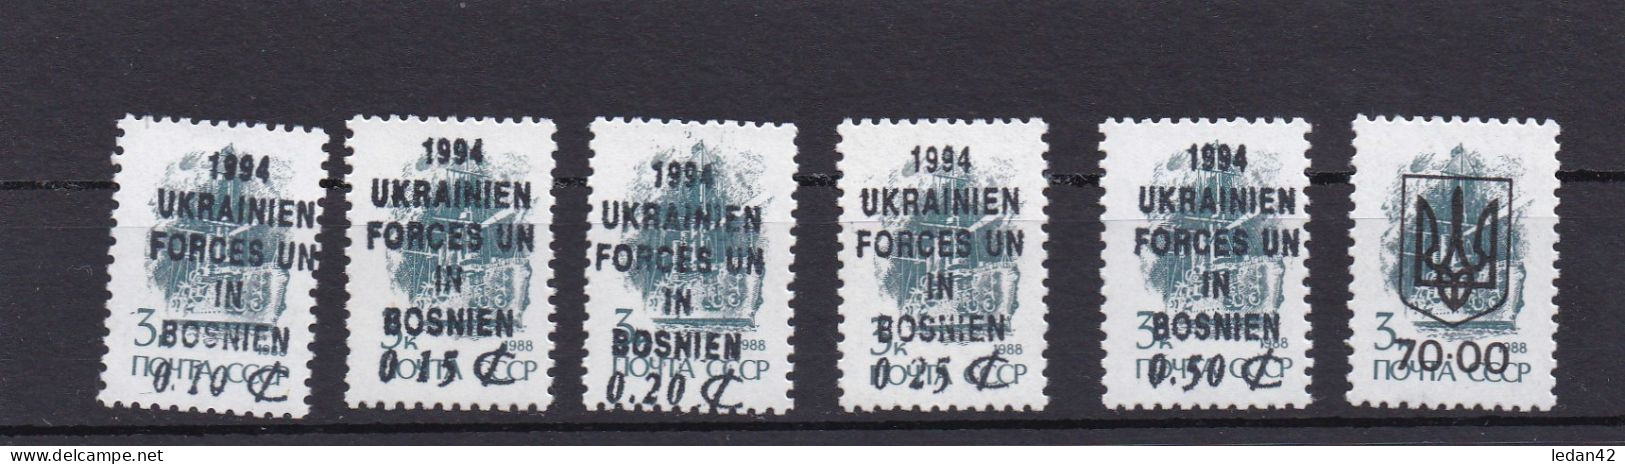 Ukraine 1994, Corps D'interposition U N En Bosnie ** - Ucraina